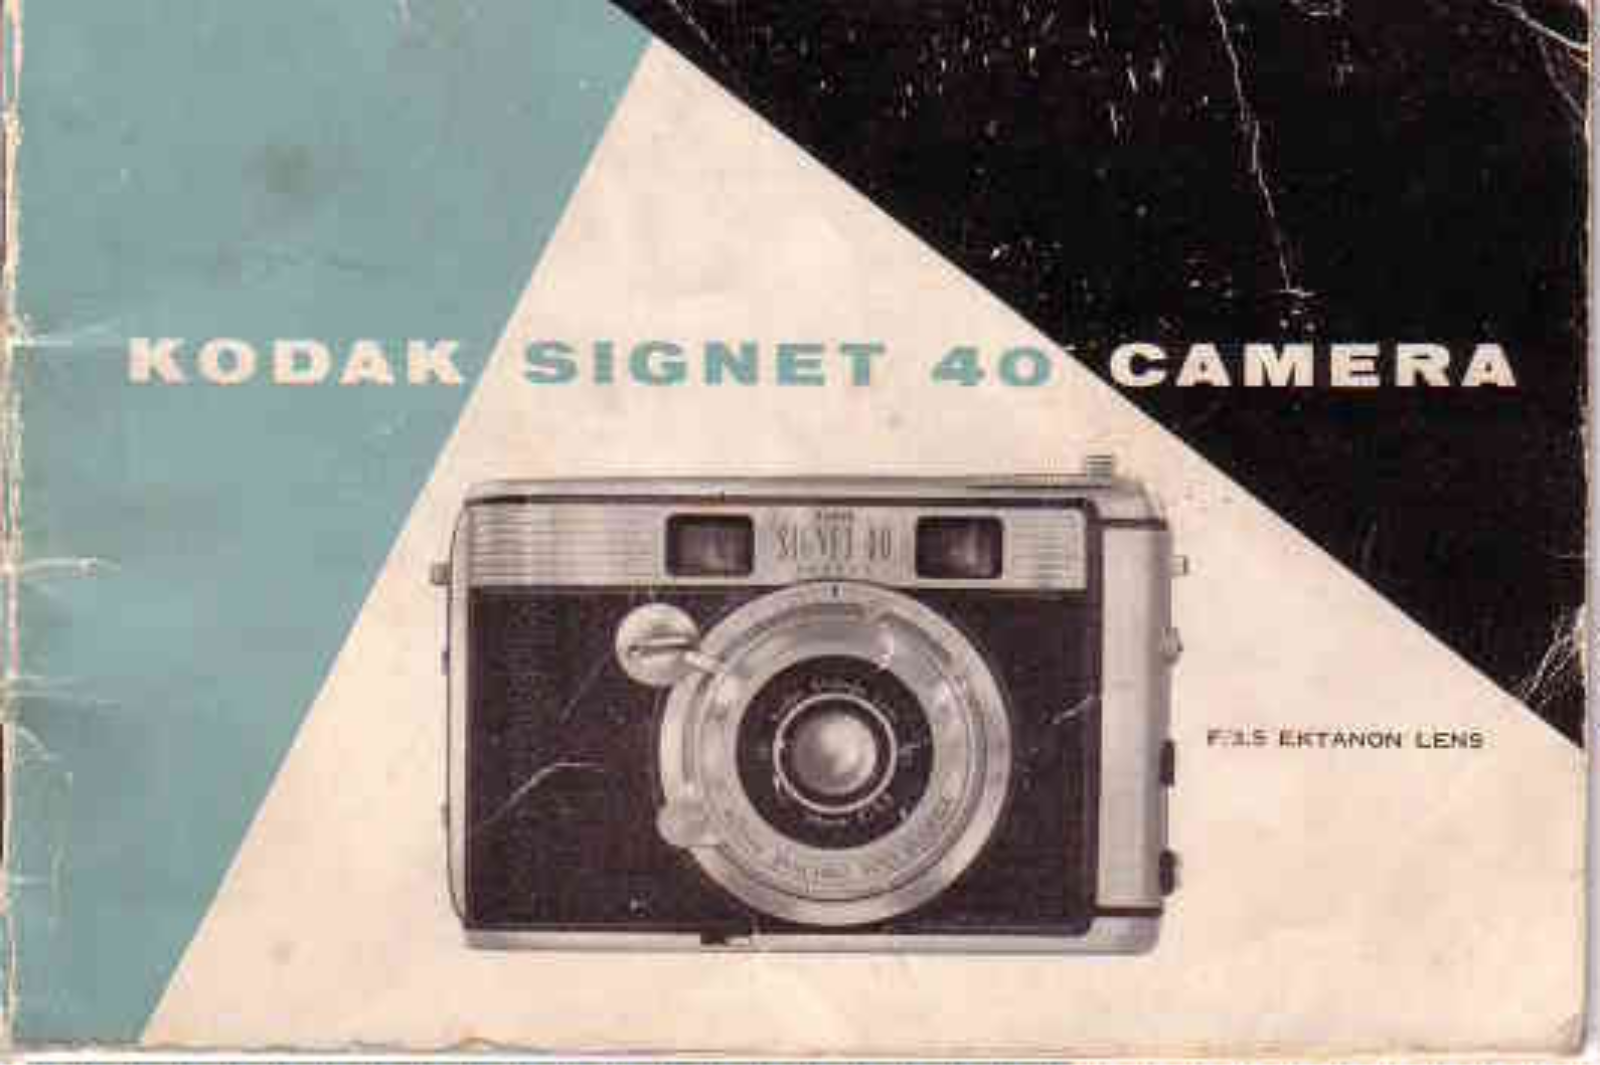 Kodak Signet 40 Instruction Manual